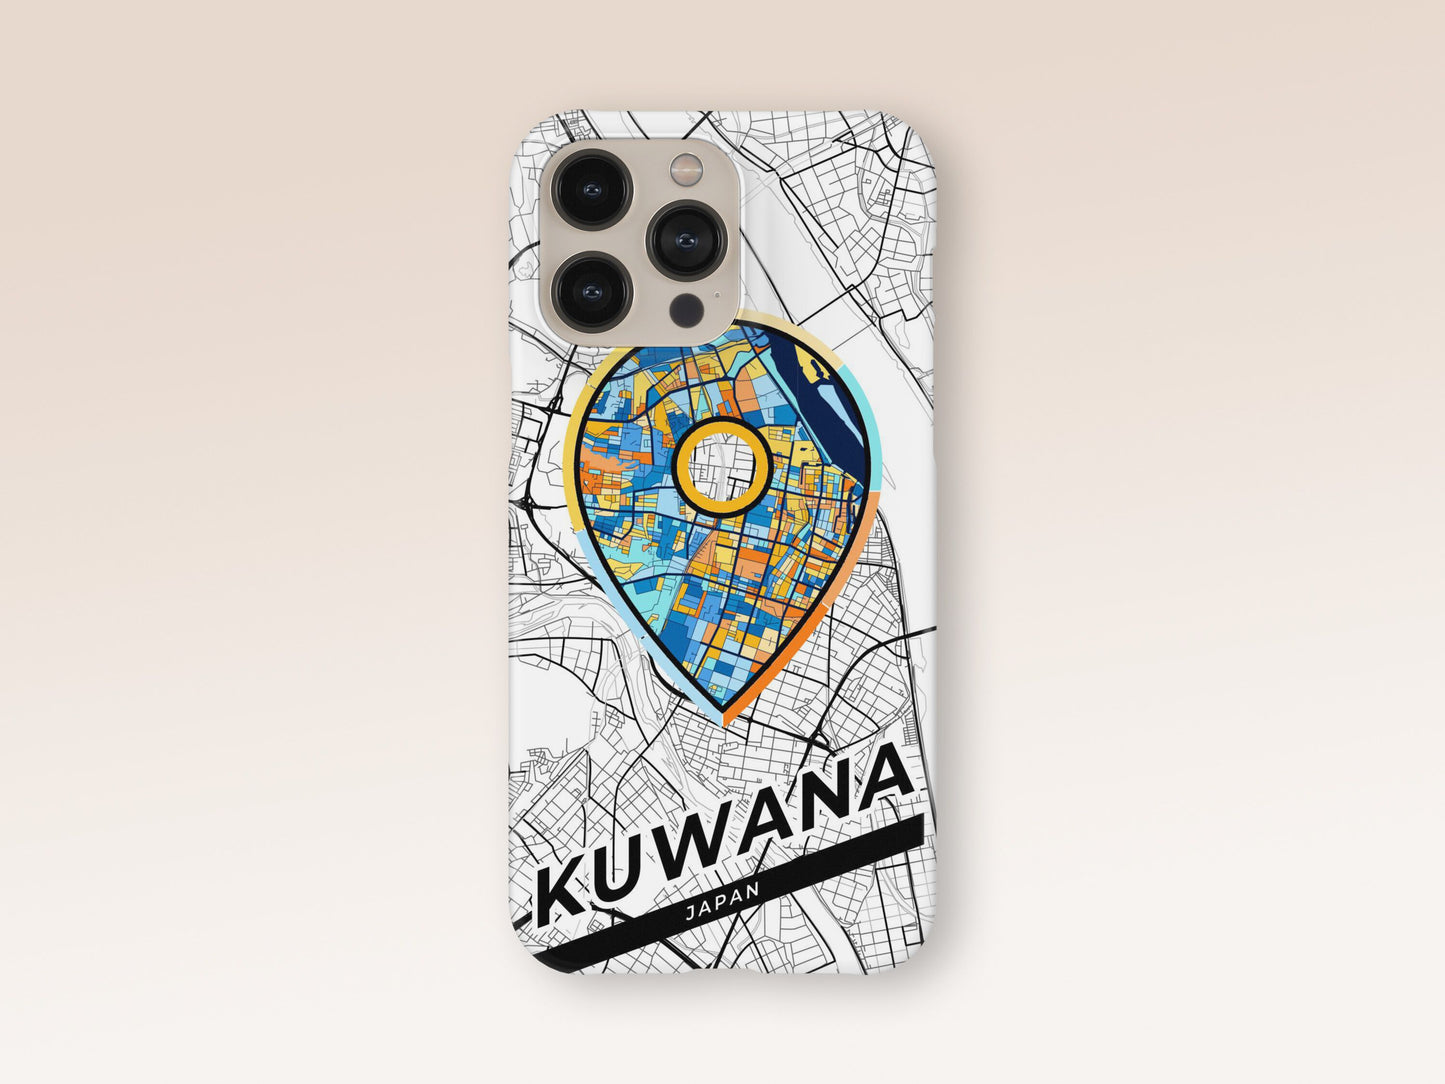 Kuwana Japan slim phone case with colorful icon. Birthday, wedding or housewarming gift. Couple match cases. 1